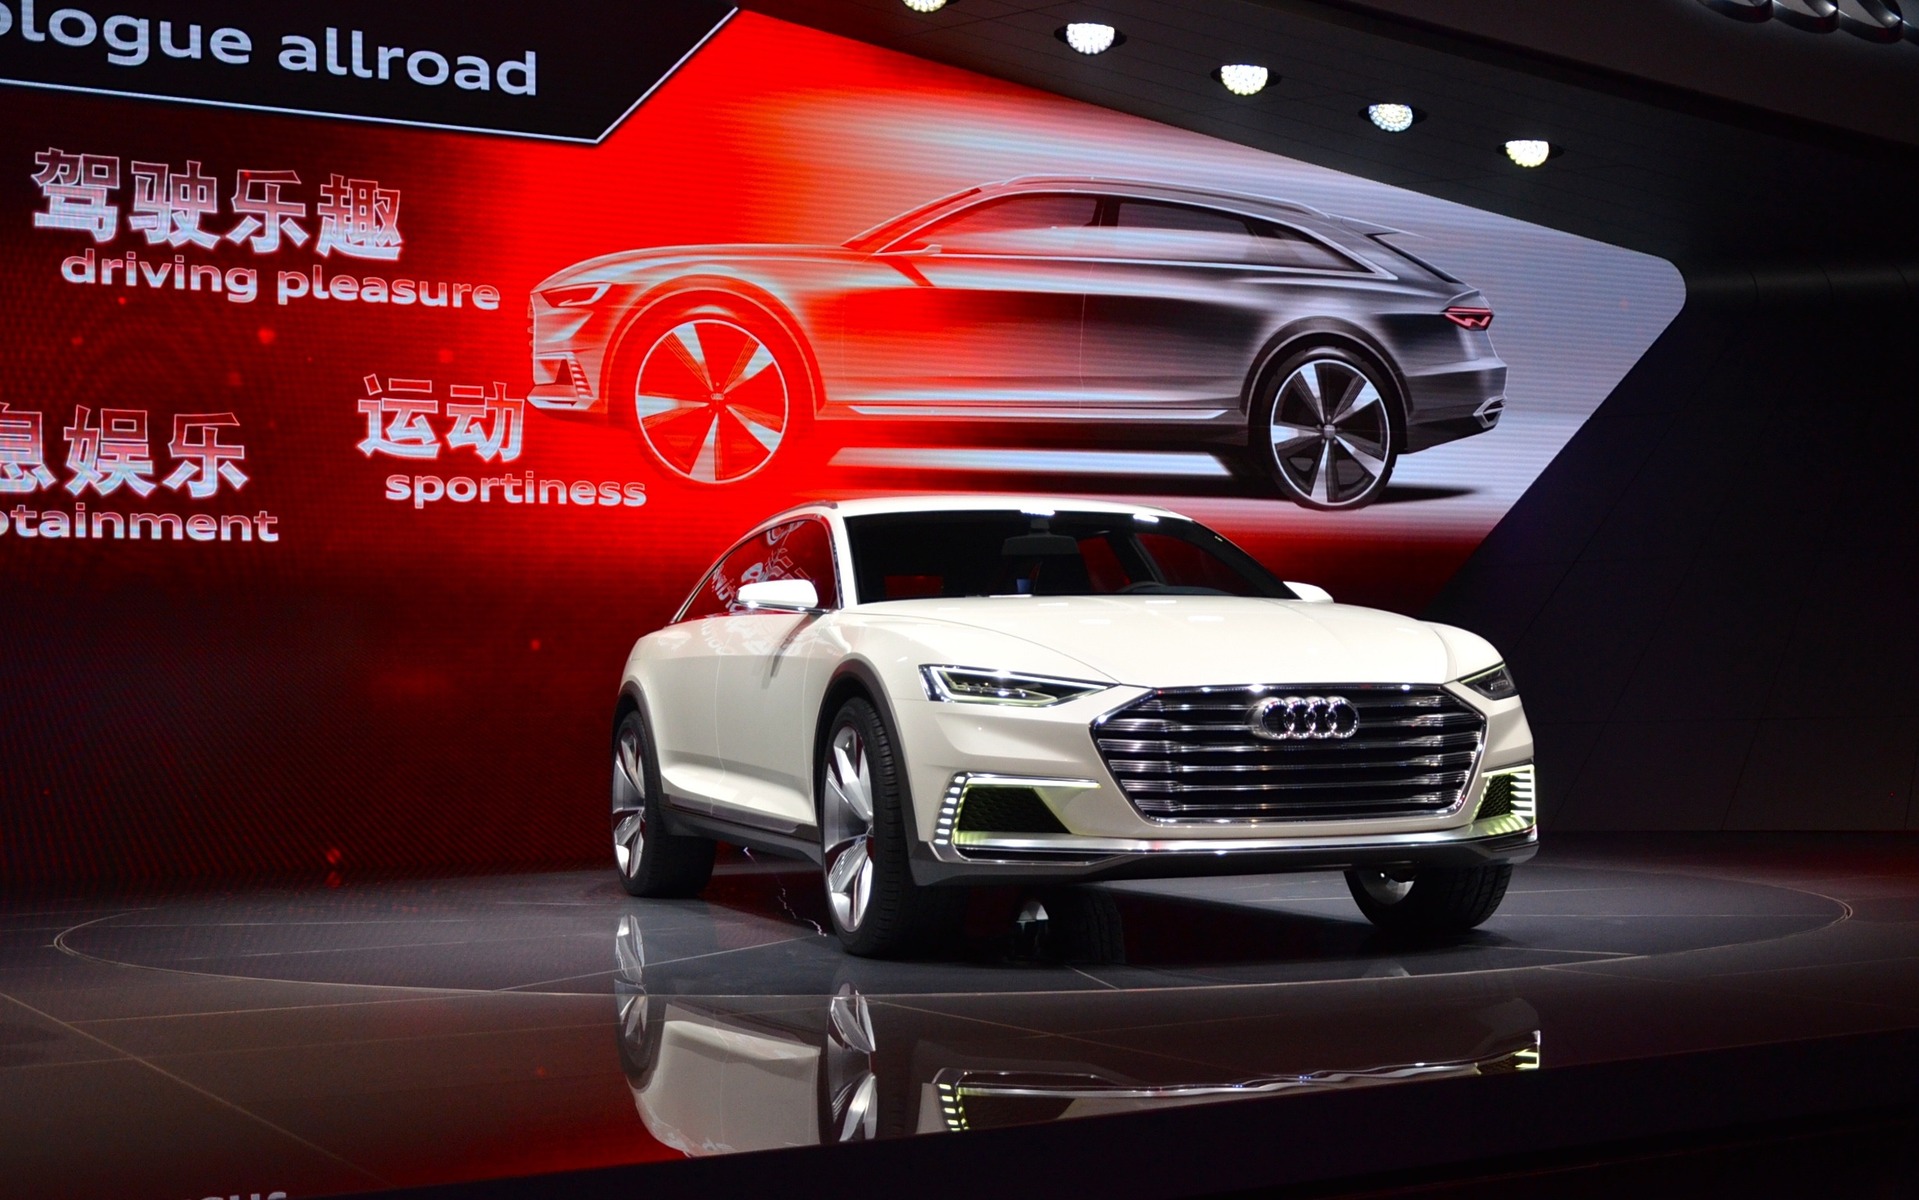 The Audi Prologue Allroad Concept at Auto Shanghai 2015.